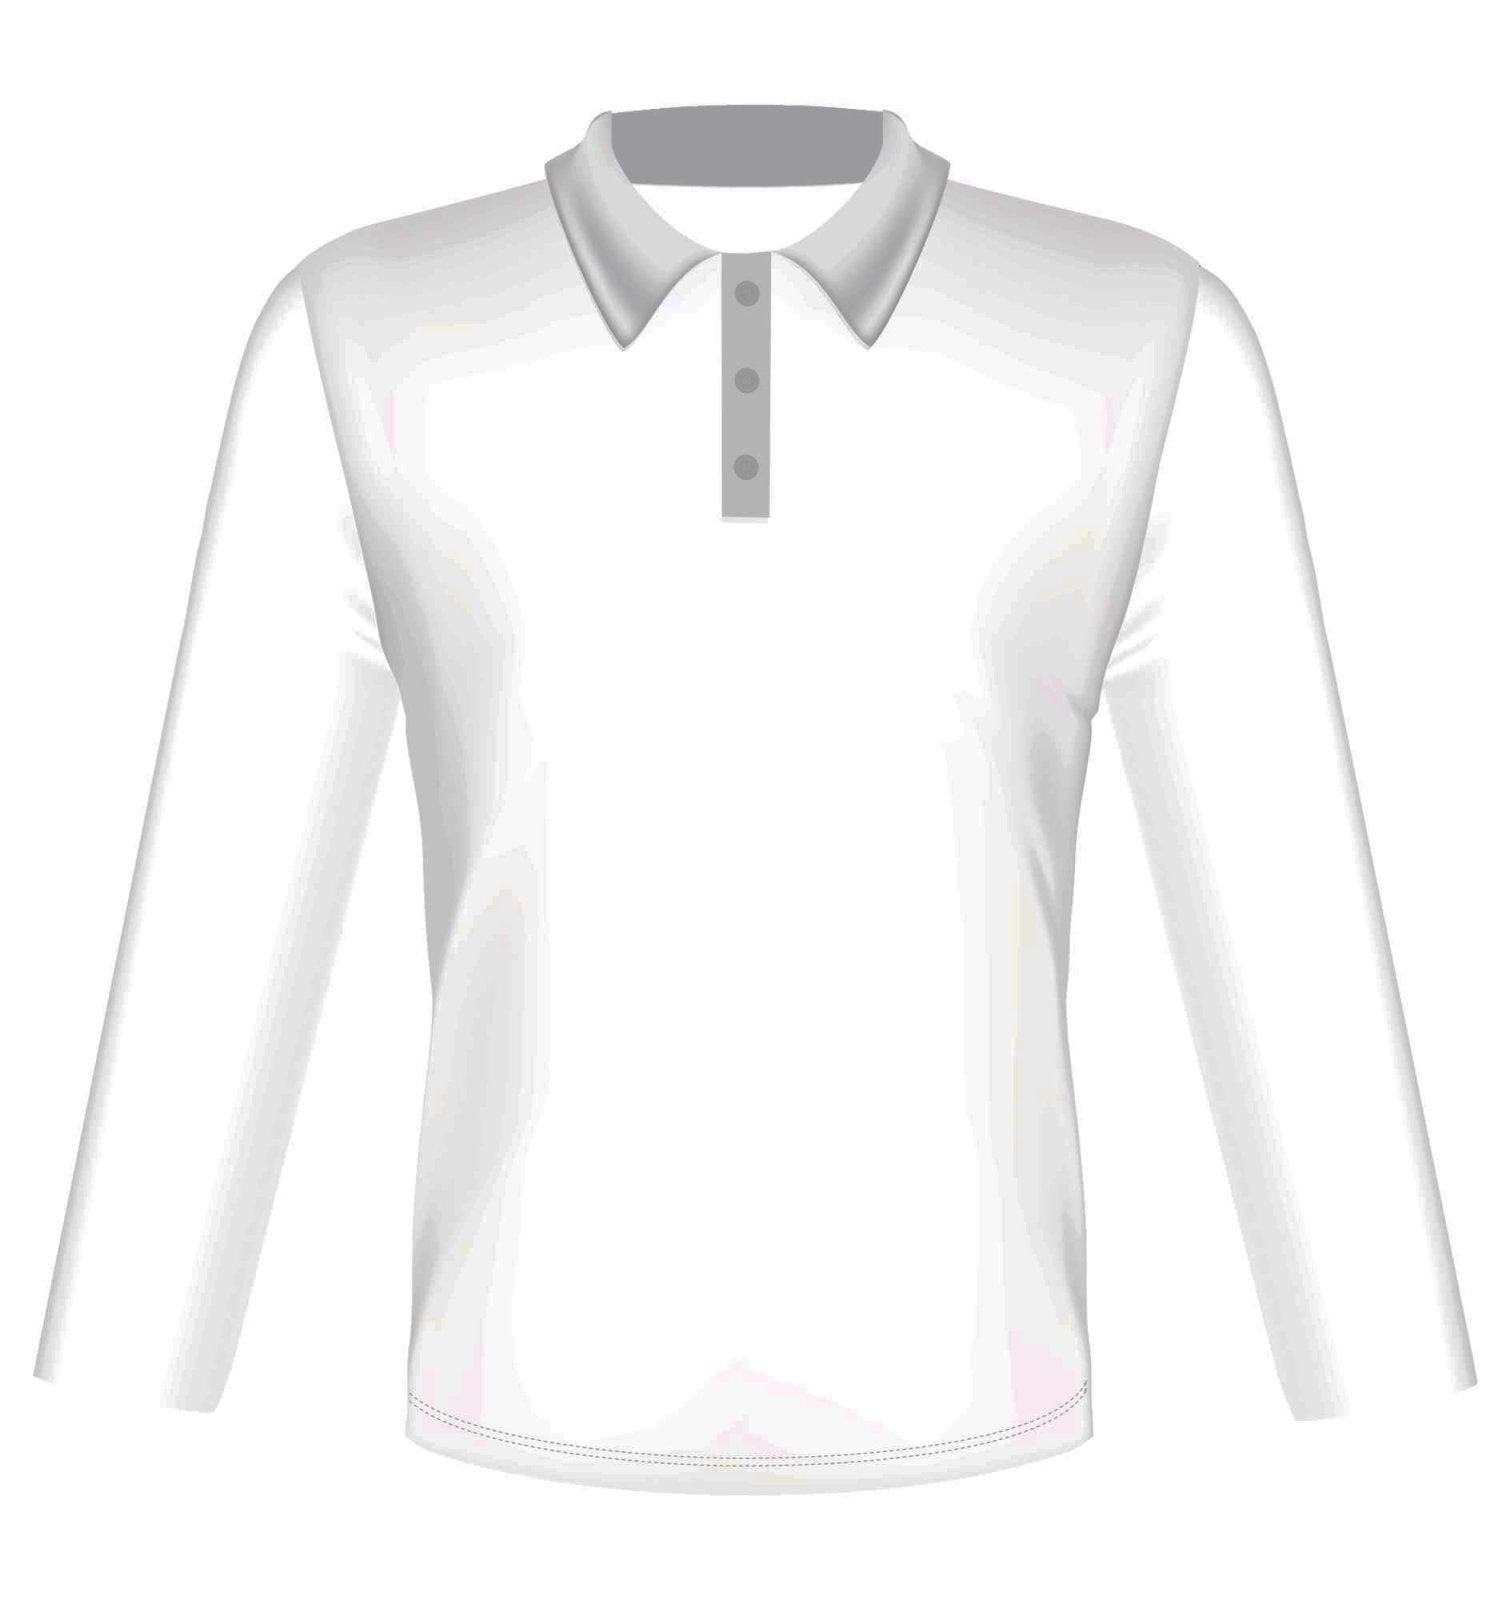 Custom Shirts - Sun Safe Clothing/ Fishing Shirts/ Work Shirts - Long Sleeve